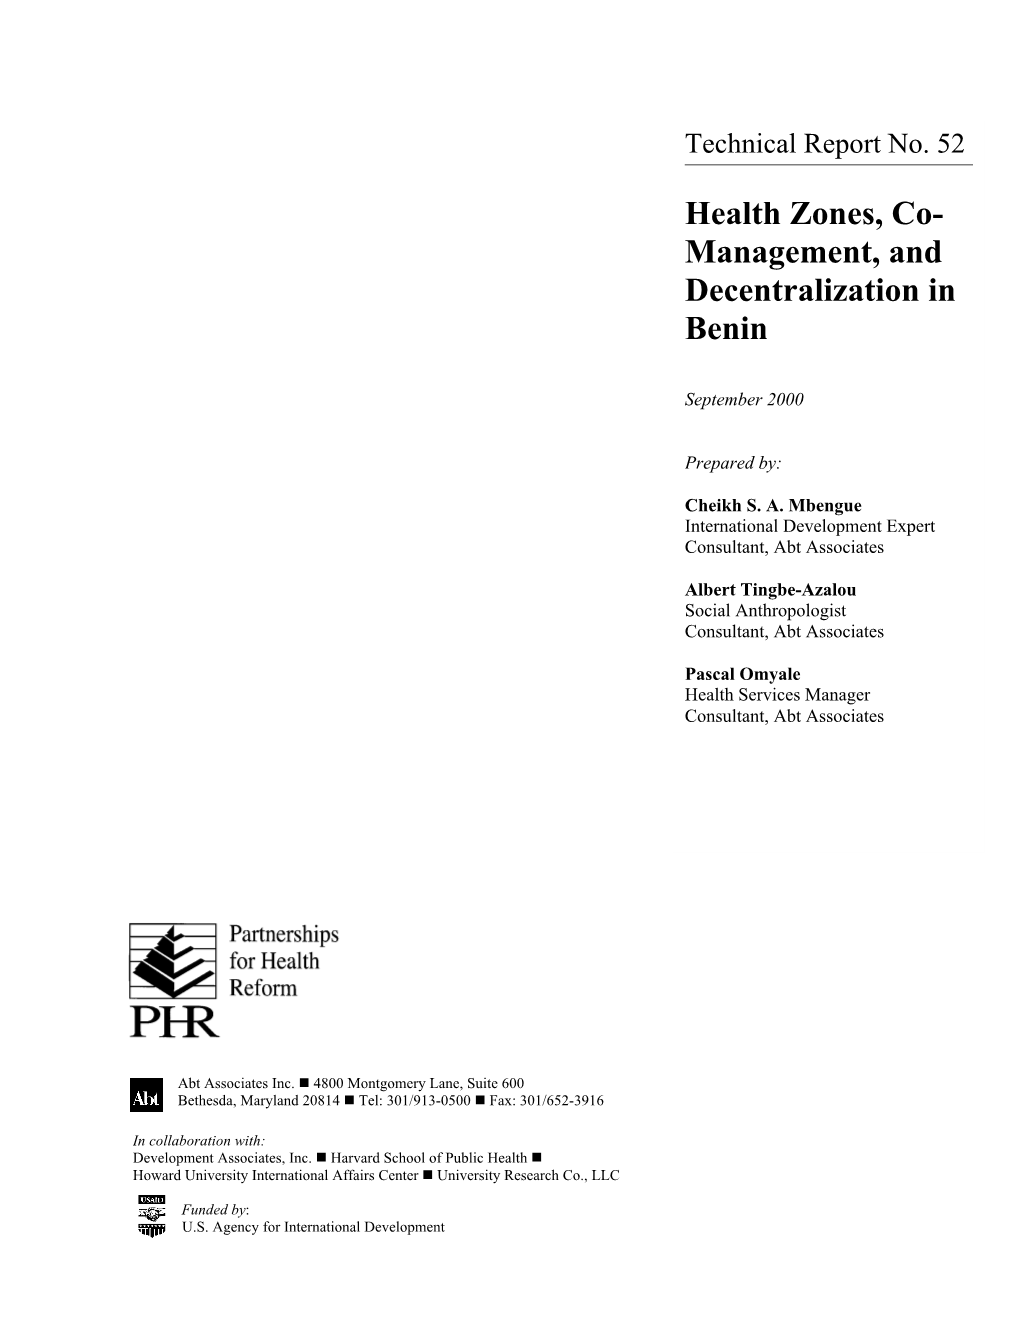 Health Zones, Co- Management, and Decentralization in Benin